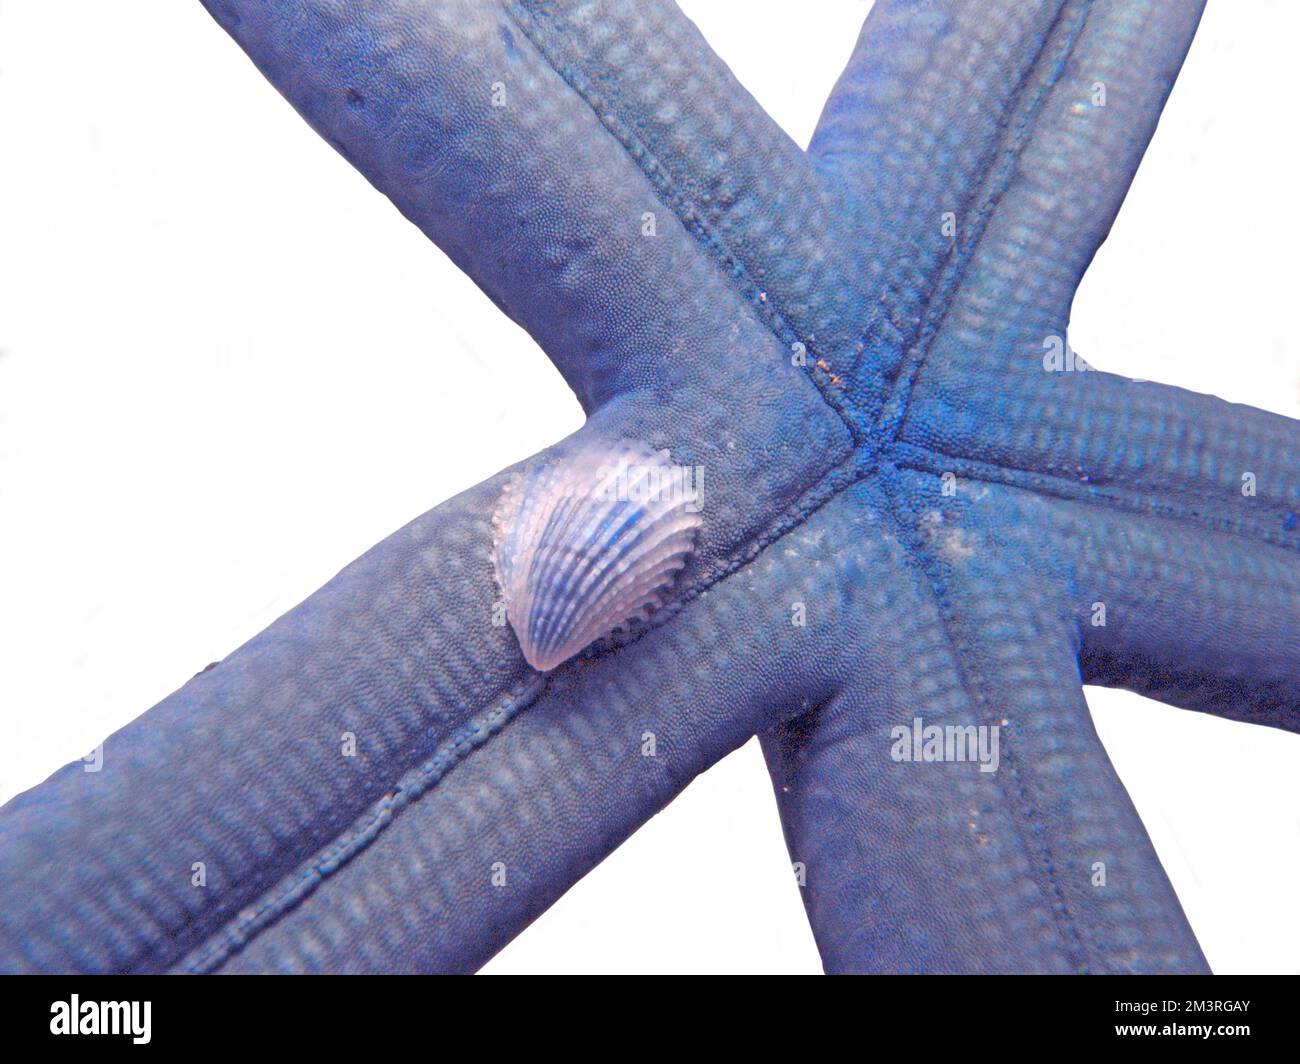 Linckia bleu (Linckia laevigata) avec escargot parasite (Thyca), parasite, ectoparasite, autonome, récif de corail, Indo-Pacific, Cebu, Philippines Banque D'Images